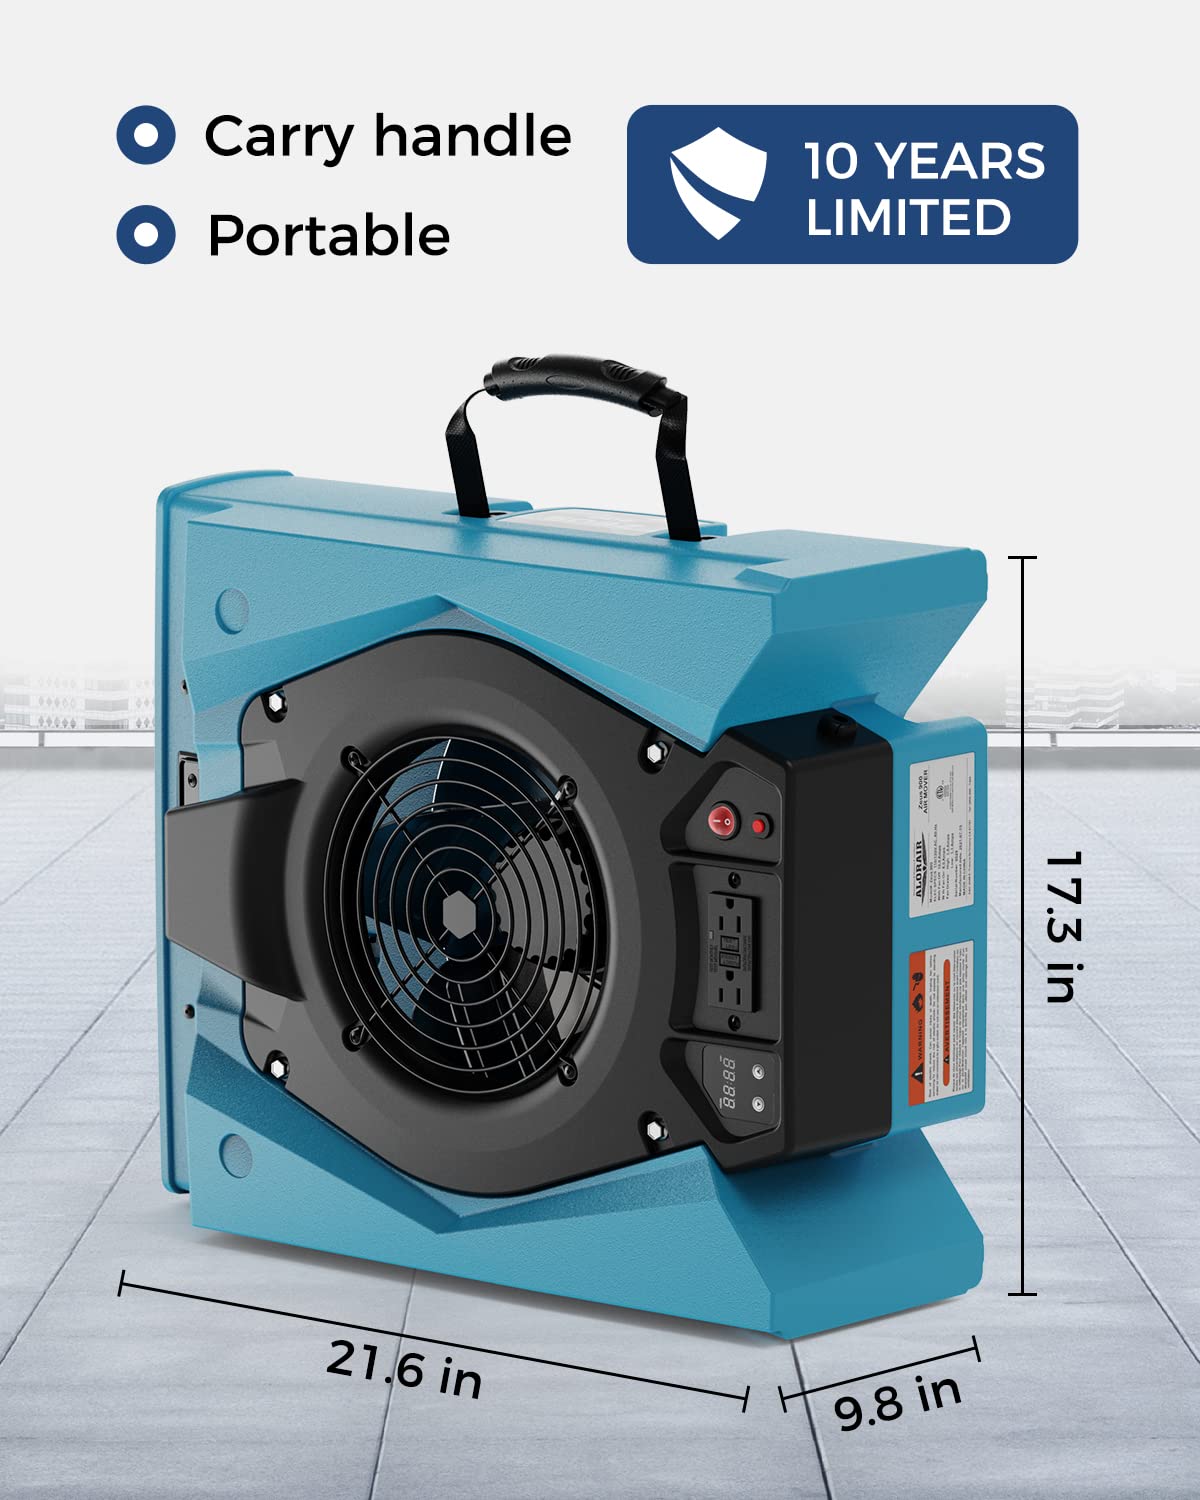 AlorAir® Zeus 900 Air Mover Professional Dryer